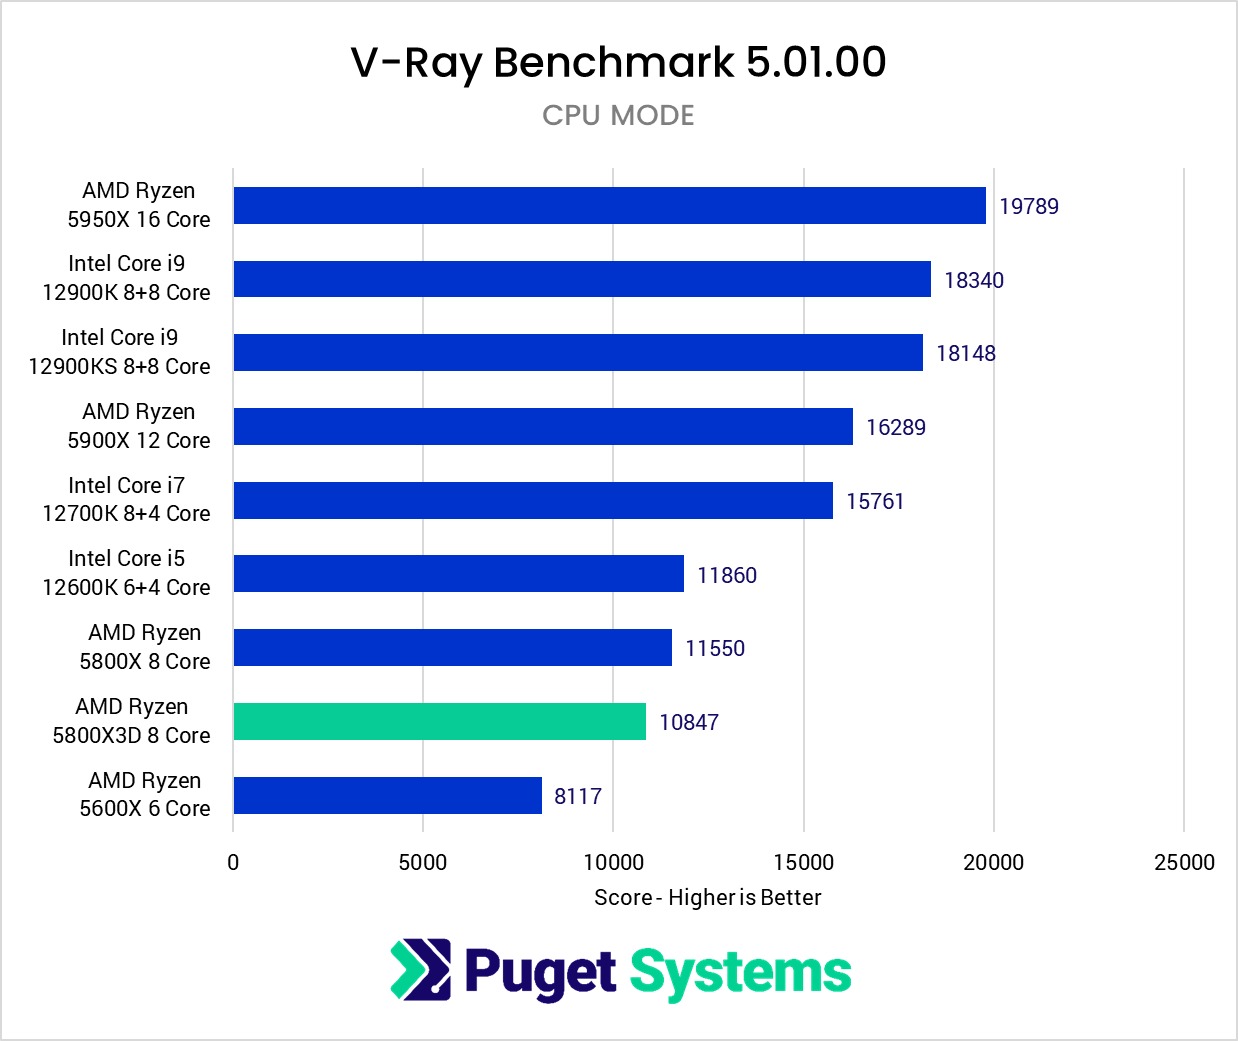 AMD Ryzen 7 5800X3D Specs